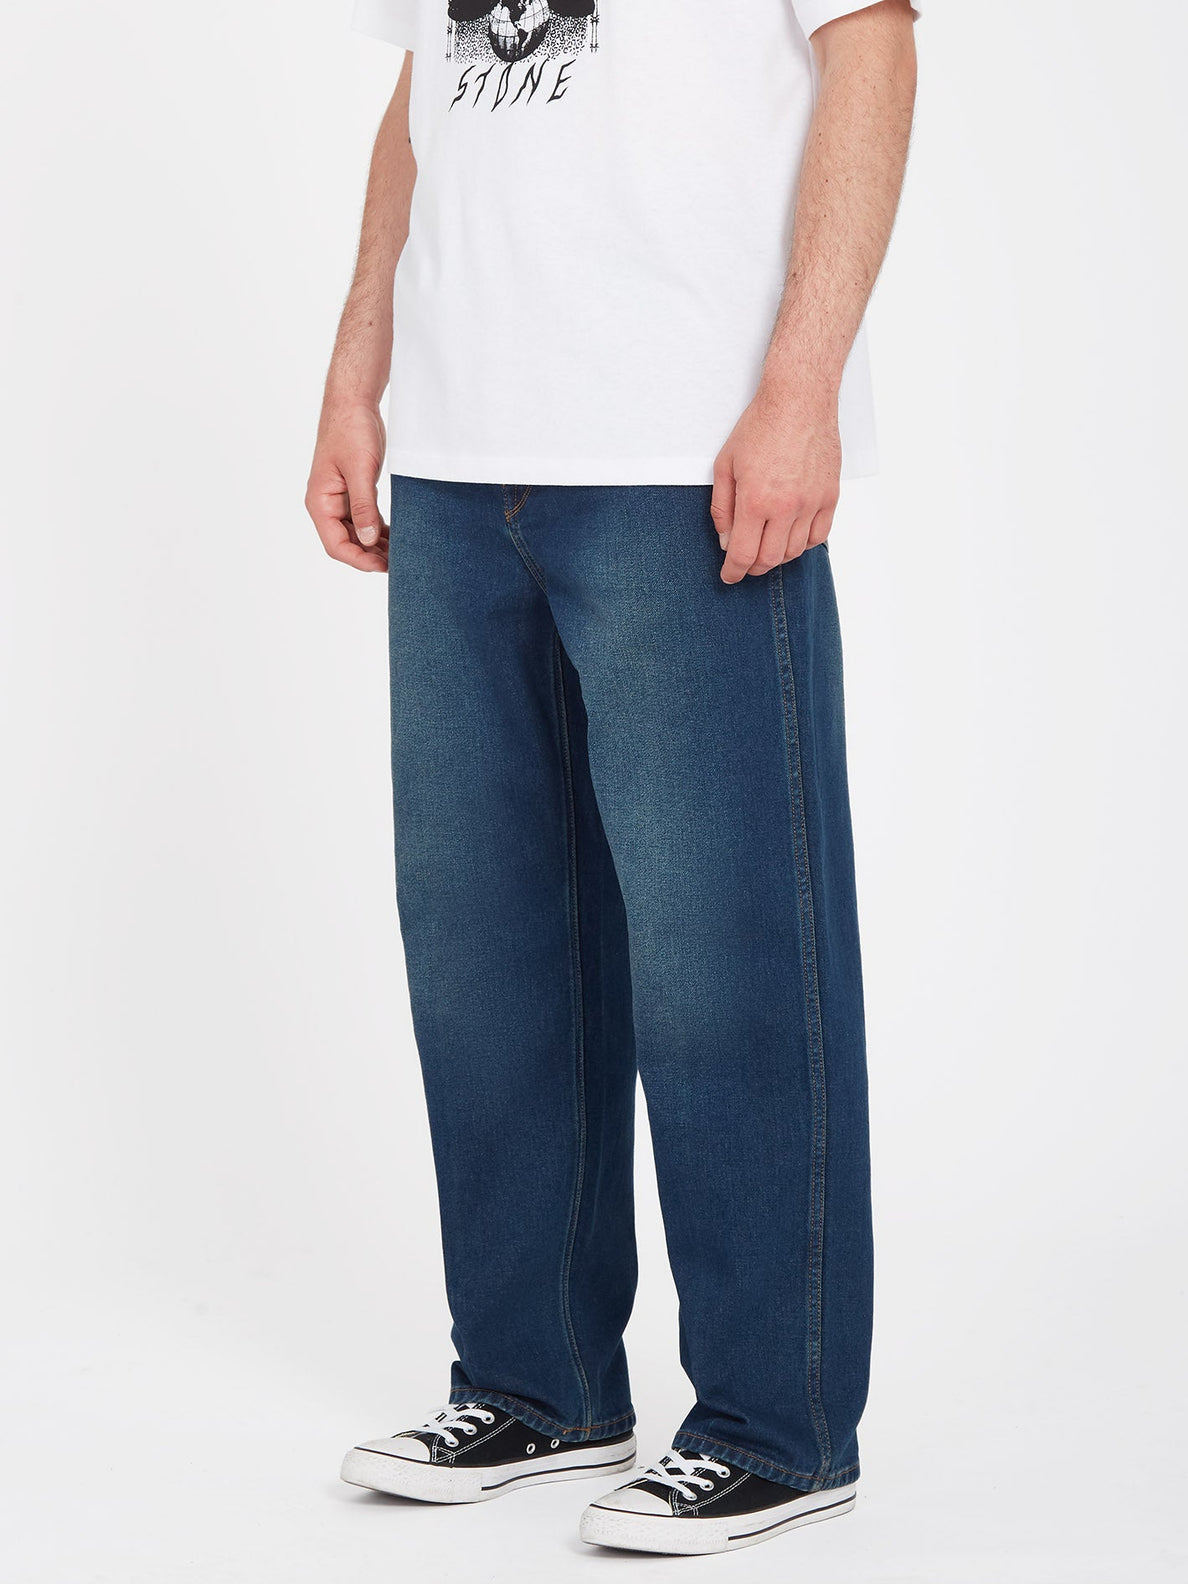 Nailer Jeans - MATURED BLUE (A1912304_MBL) [F]